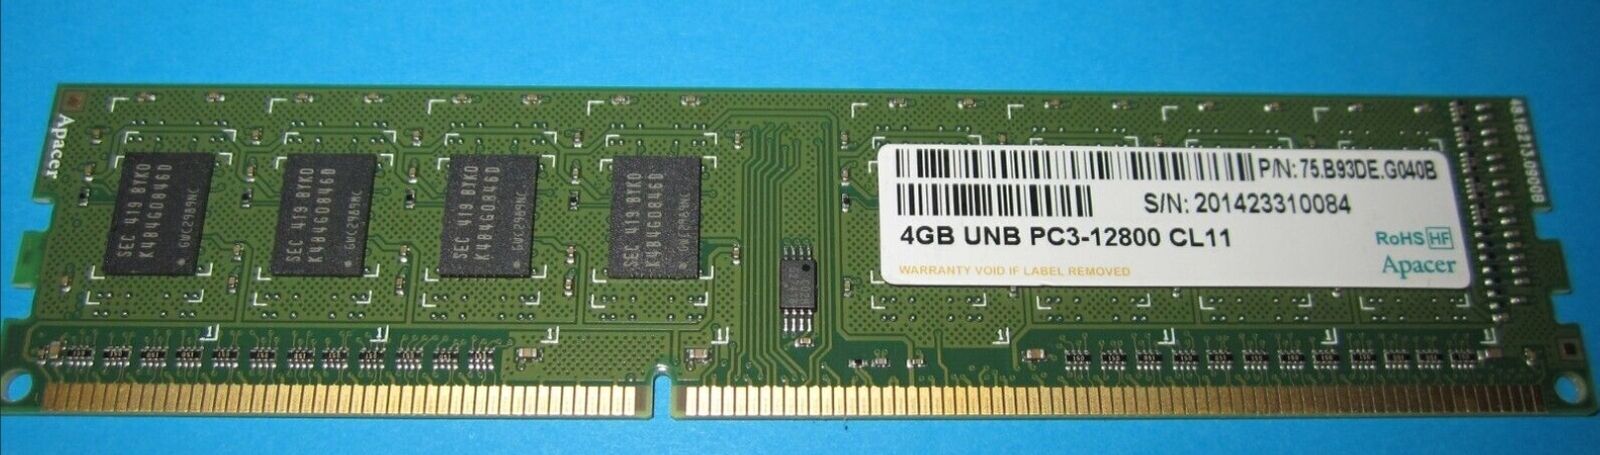 Apacer 4GB 75.B93DE.G040B UNB PC3-12800 CL11 DDR3 Desktop Memory